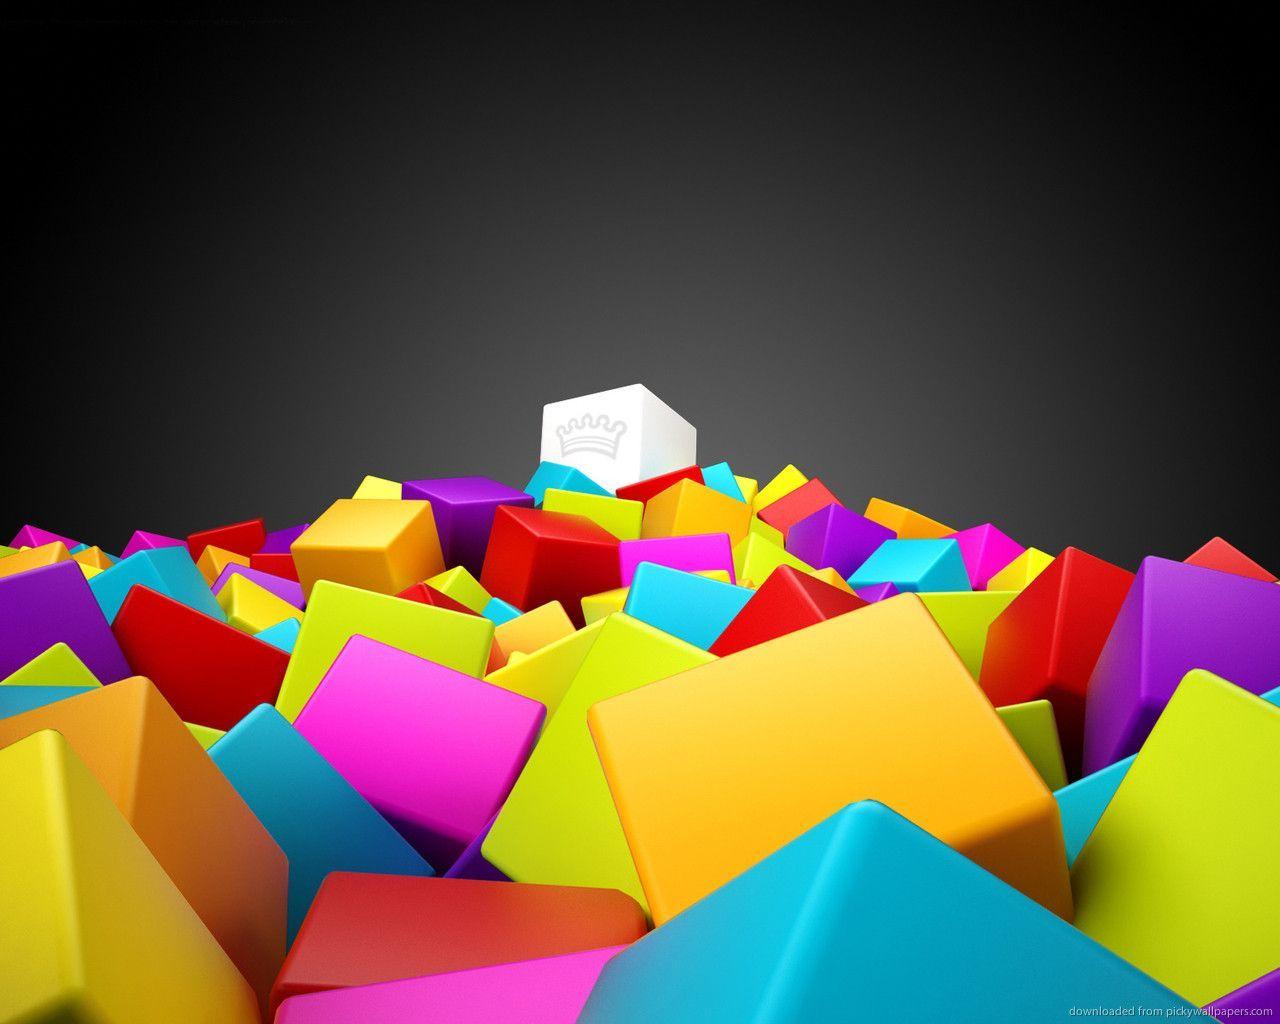 Download 1280x1024 Cool 3D Colorful Cubes Wallpaper